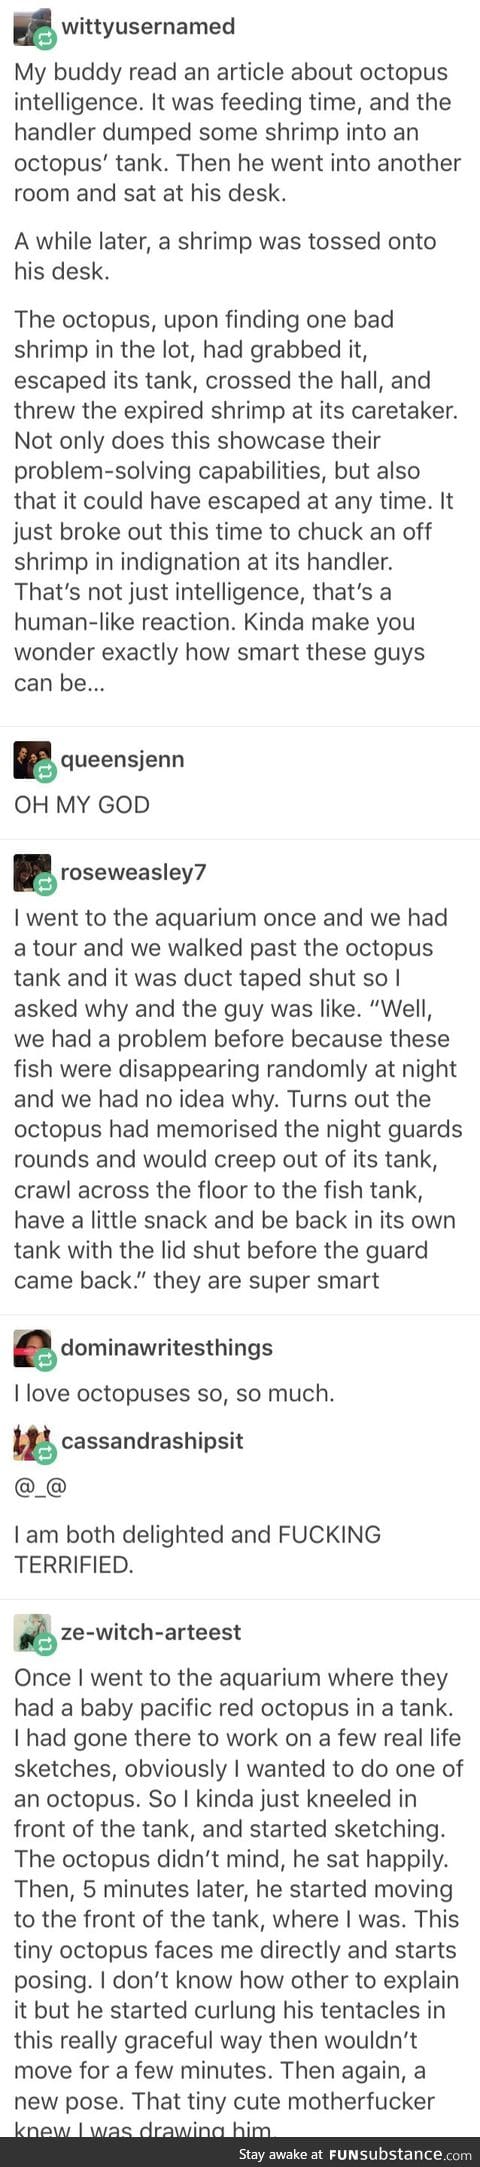 Octopi being smartasses